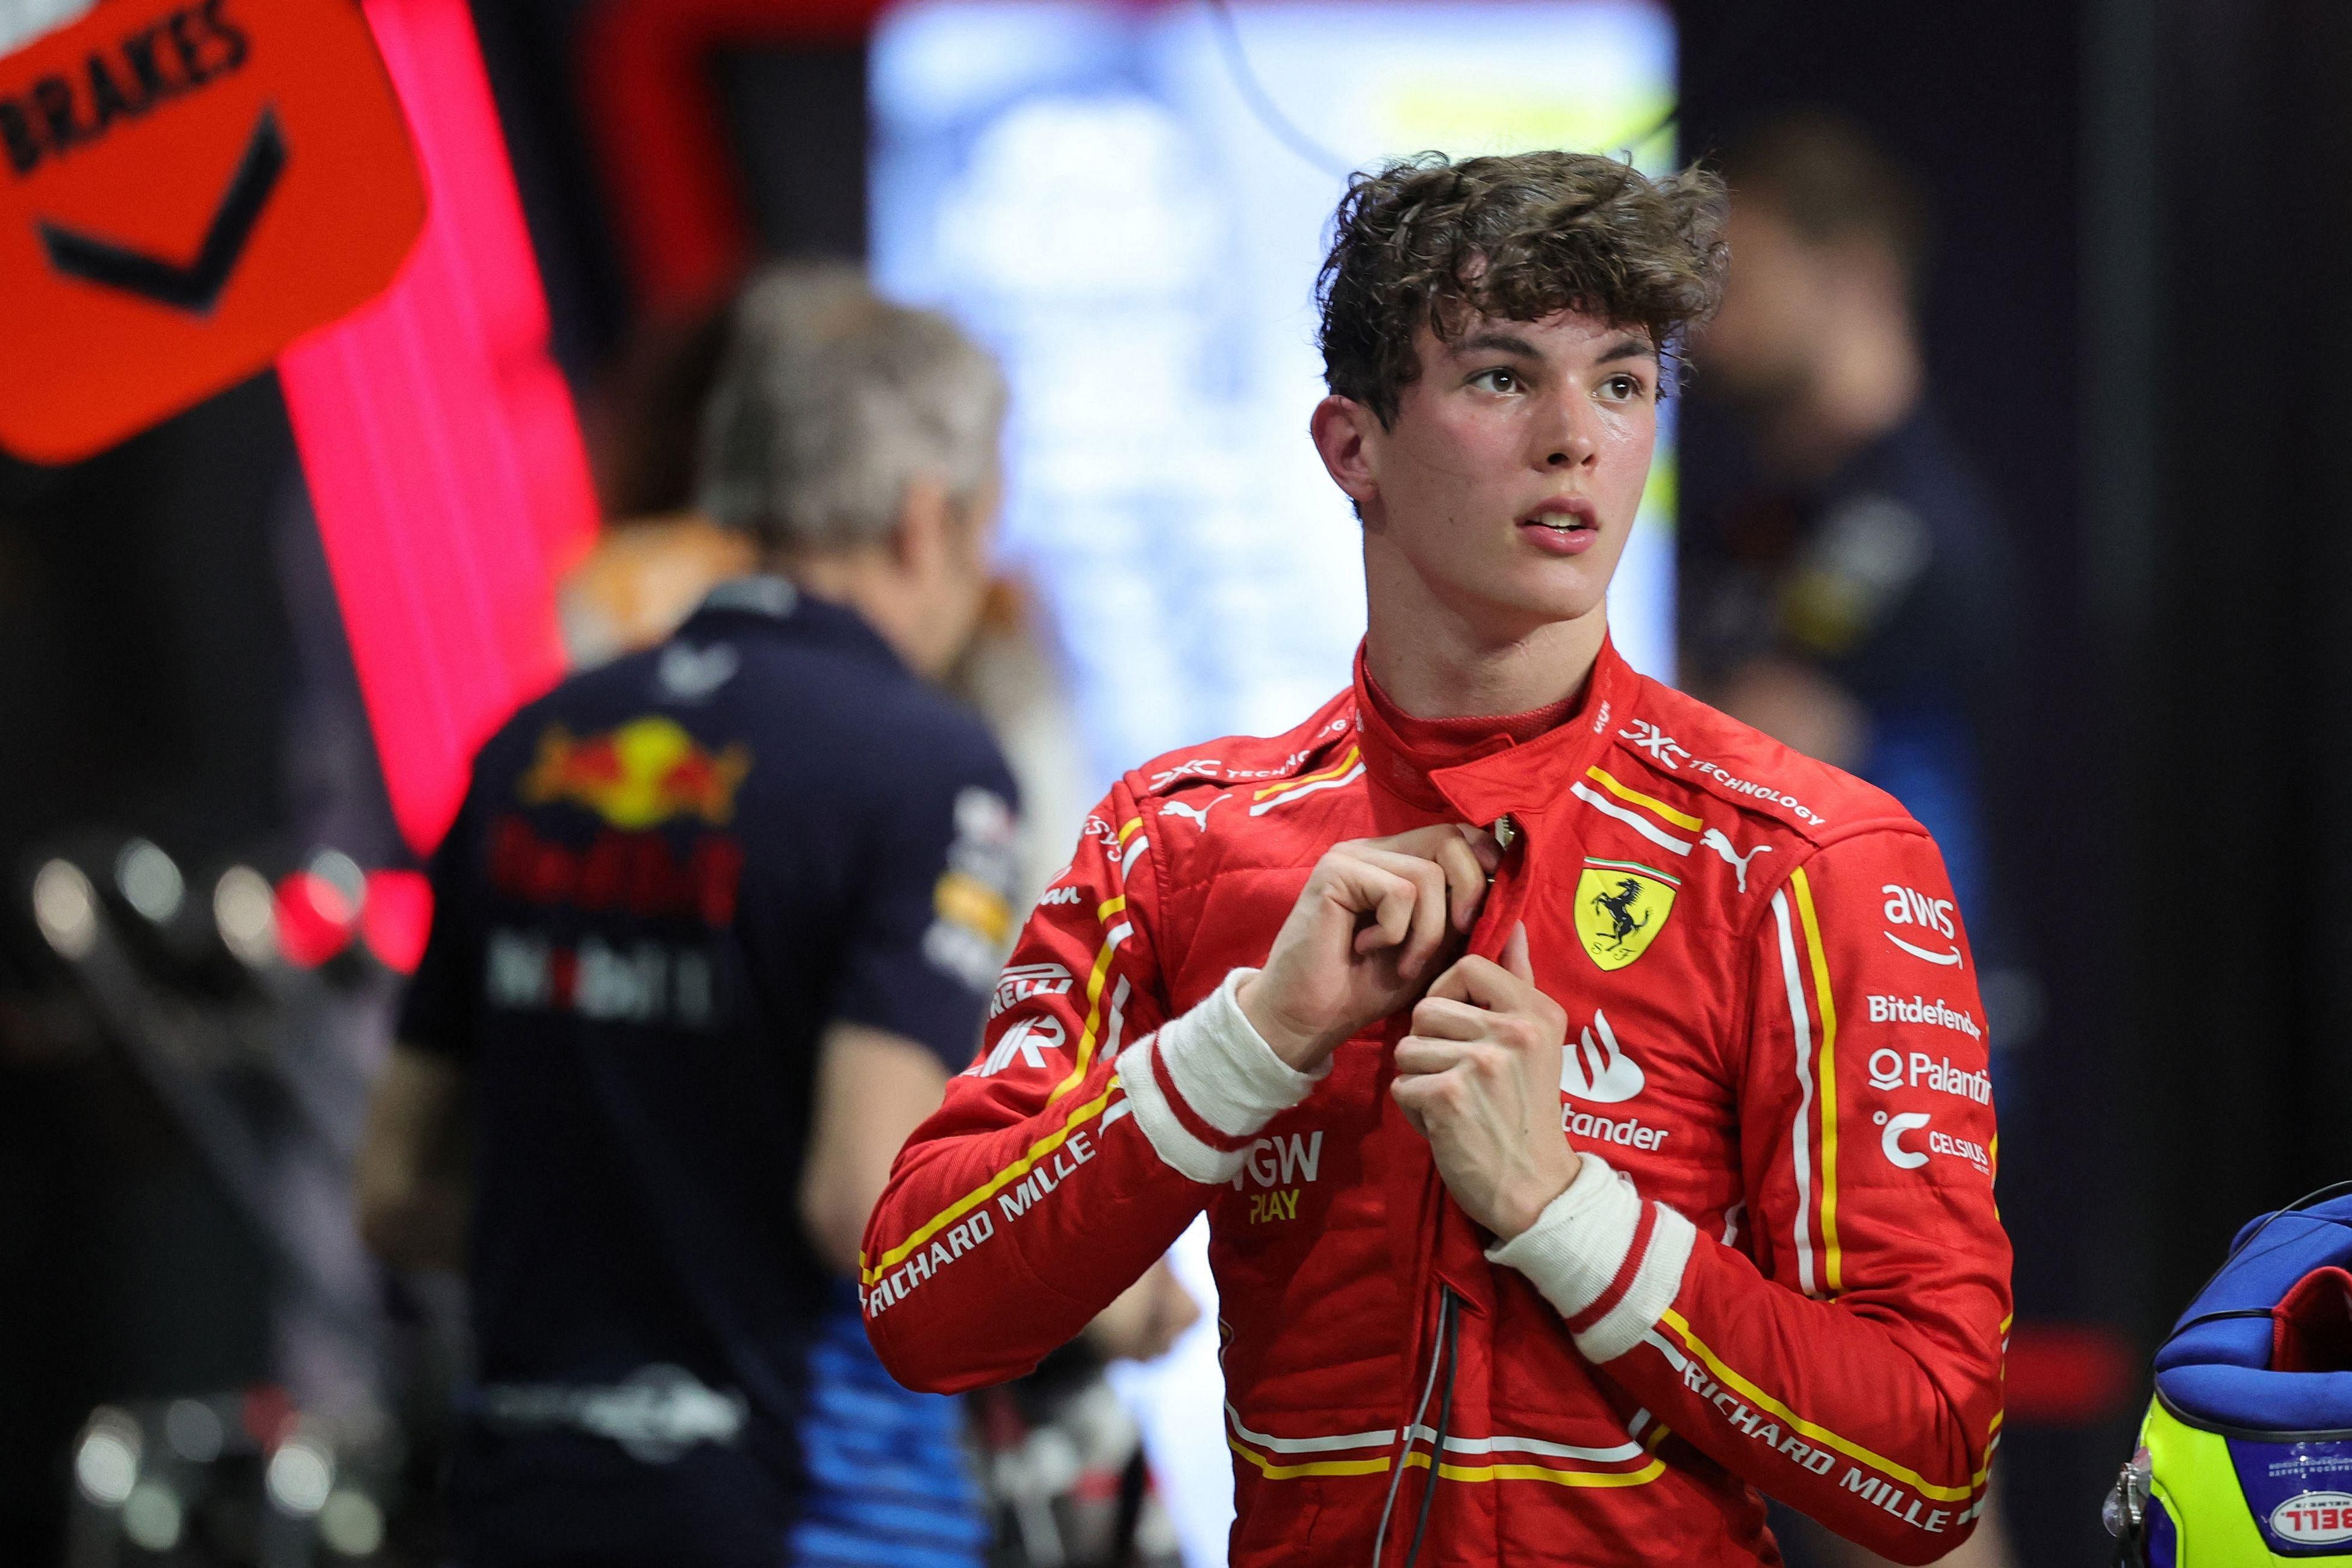 Forget Red Bull’s dominance and drama, the real headline is Ferrari’s new British teenage driver